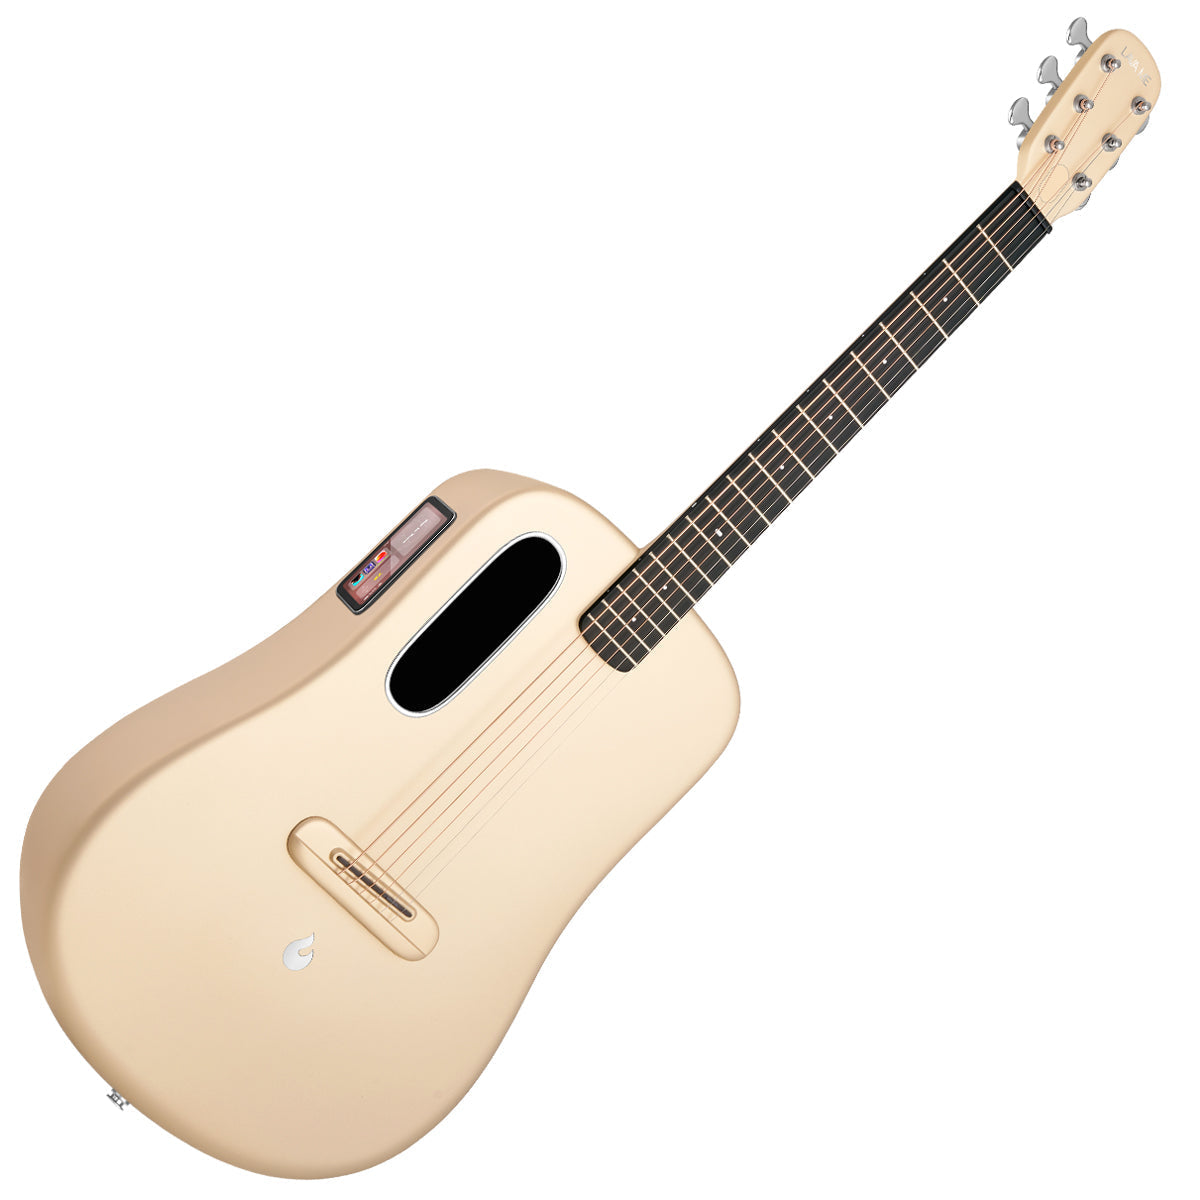 LAVA ME4 Carbon 38" with AirFlow Bag ~ Soft Gold, Acoustic Guitar for sale at Richards Guitars.